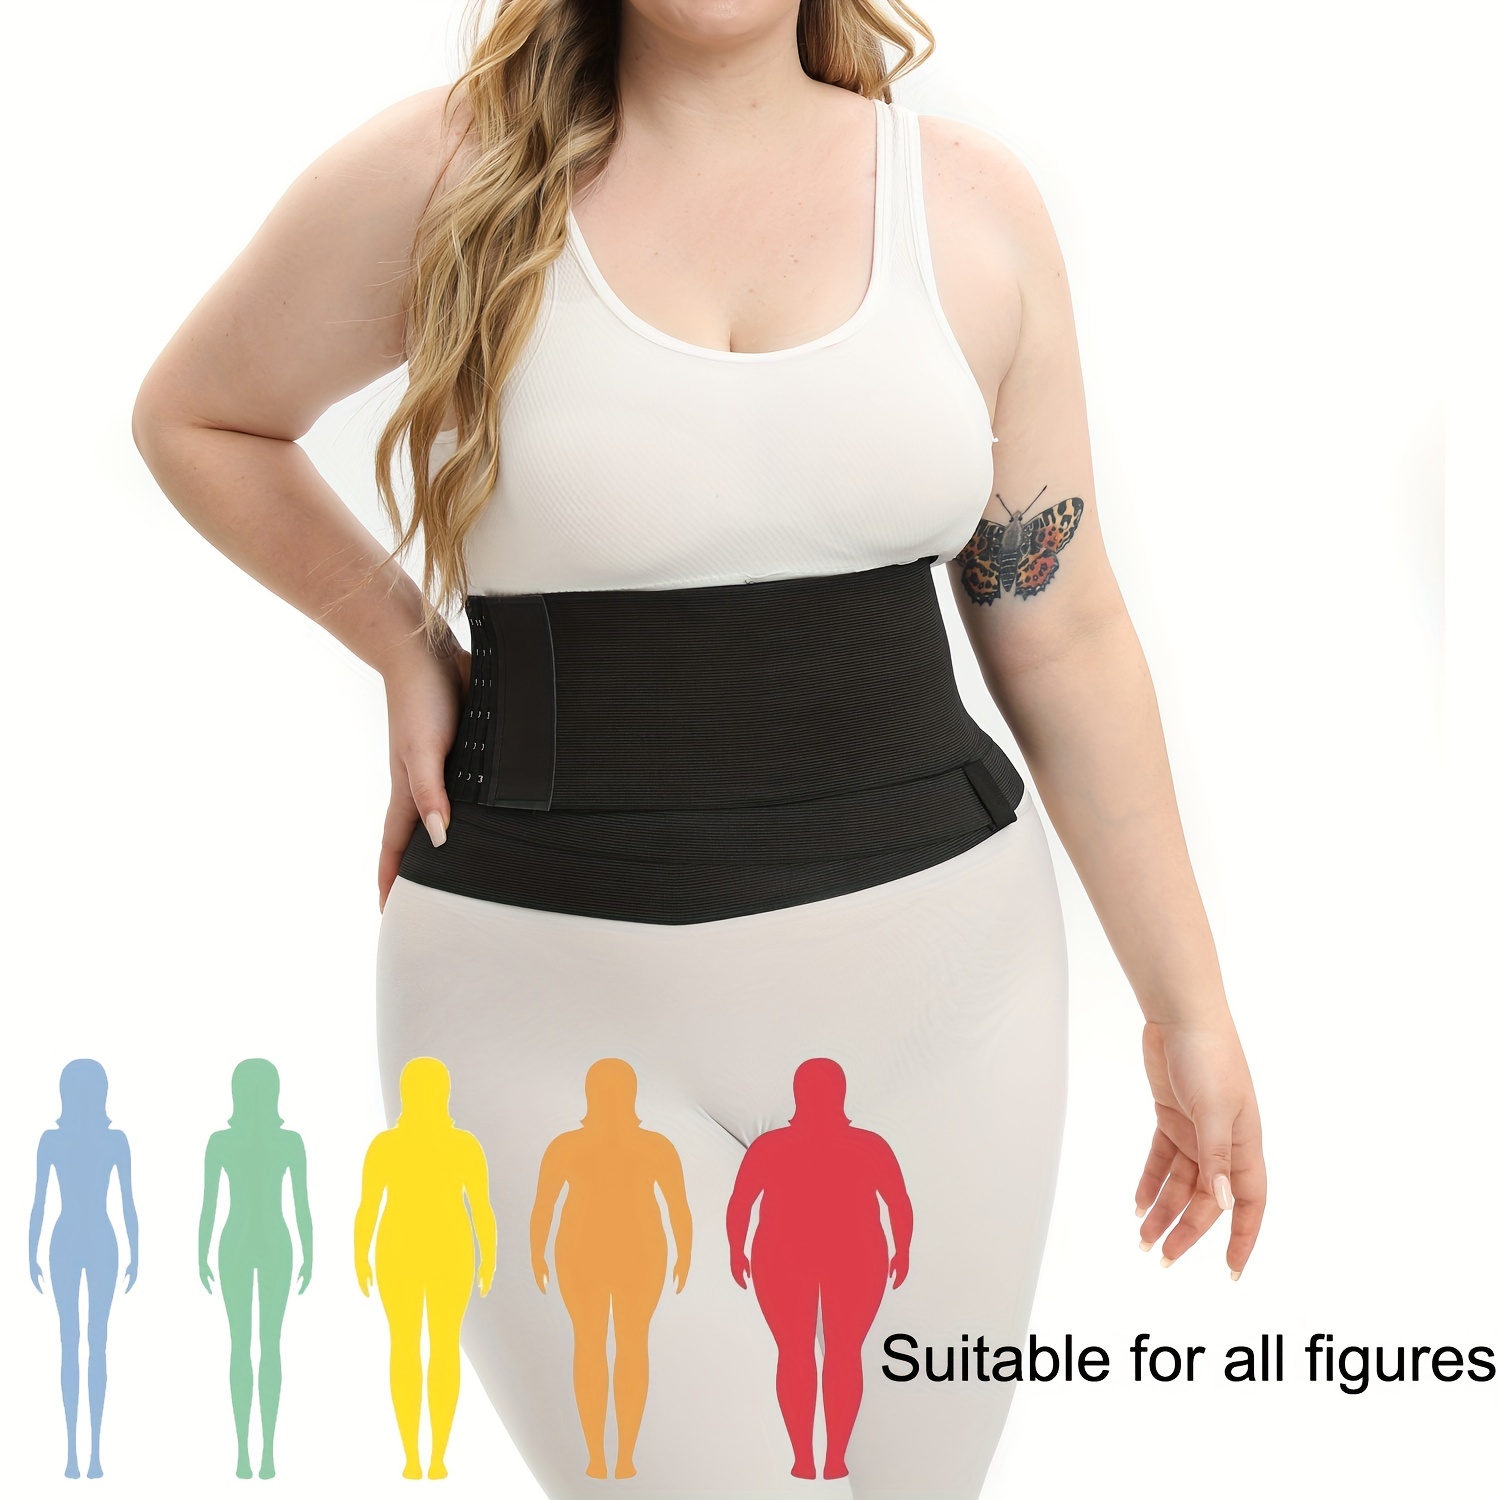 Waist Trainer For Women Lower Belly Fat Waist Wrap Plus Size